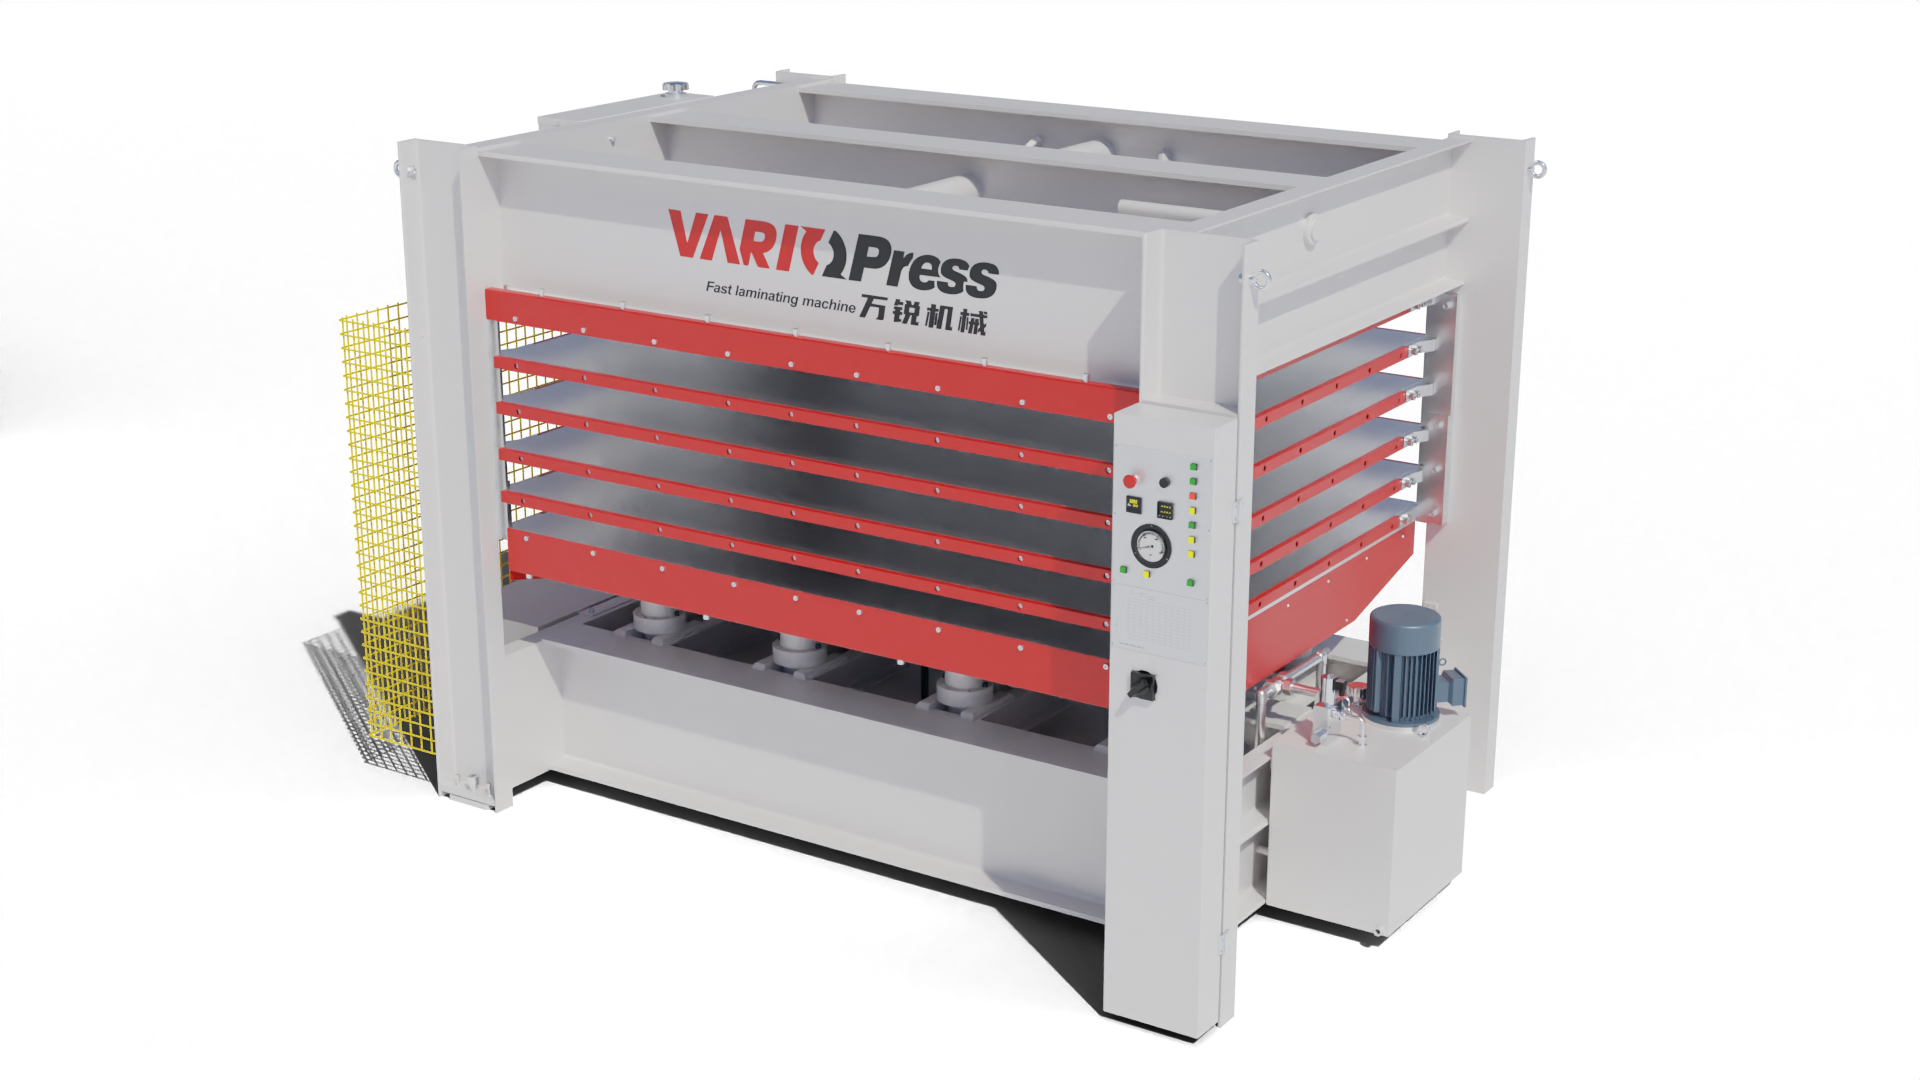 120 ton hot press series -120 ton 5-layer hot press